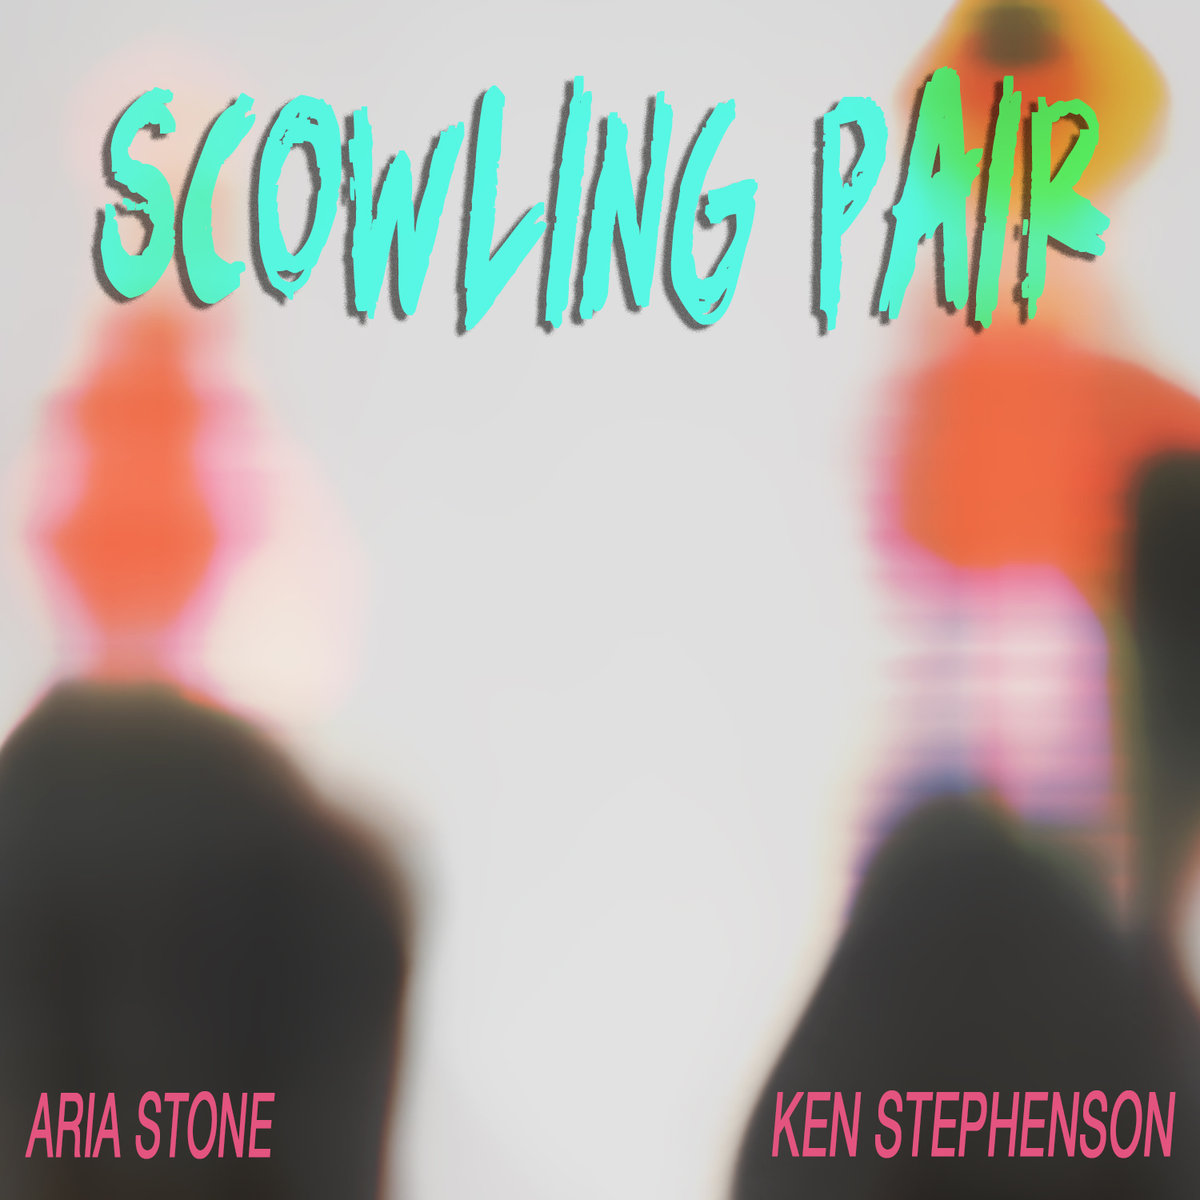  Aria Stone & Ken Stephenson – Scowling Pair